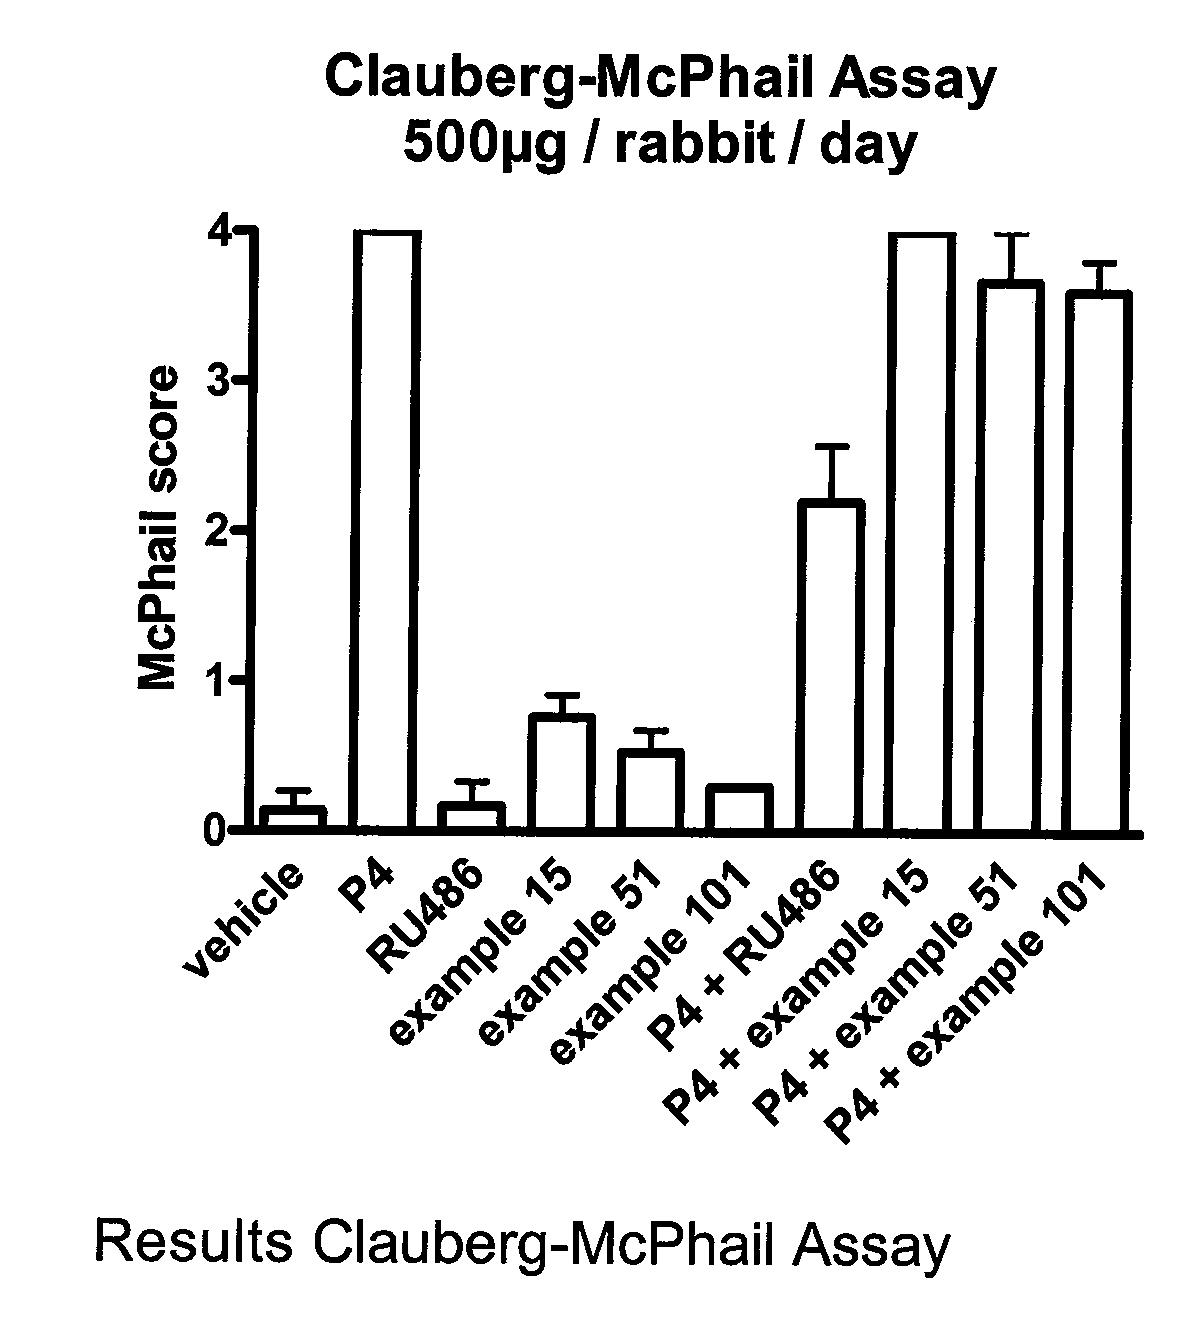 C11 Modified Retrosteroids as Progesterone Receptor Modulator Compounds